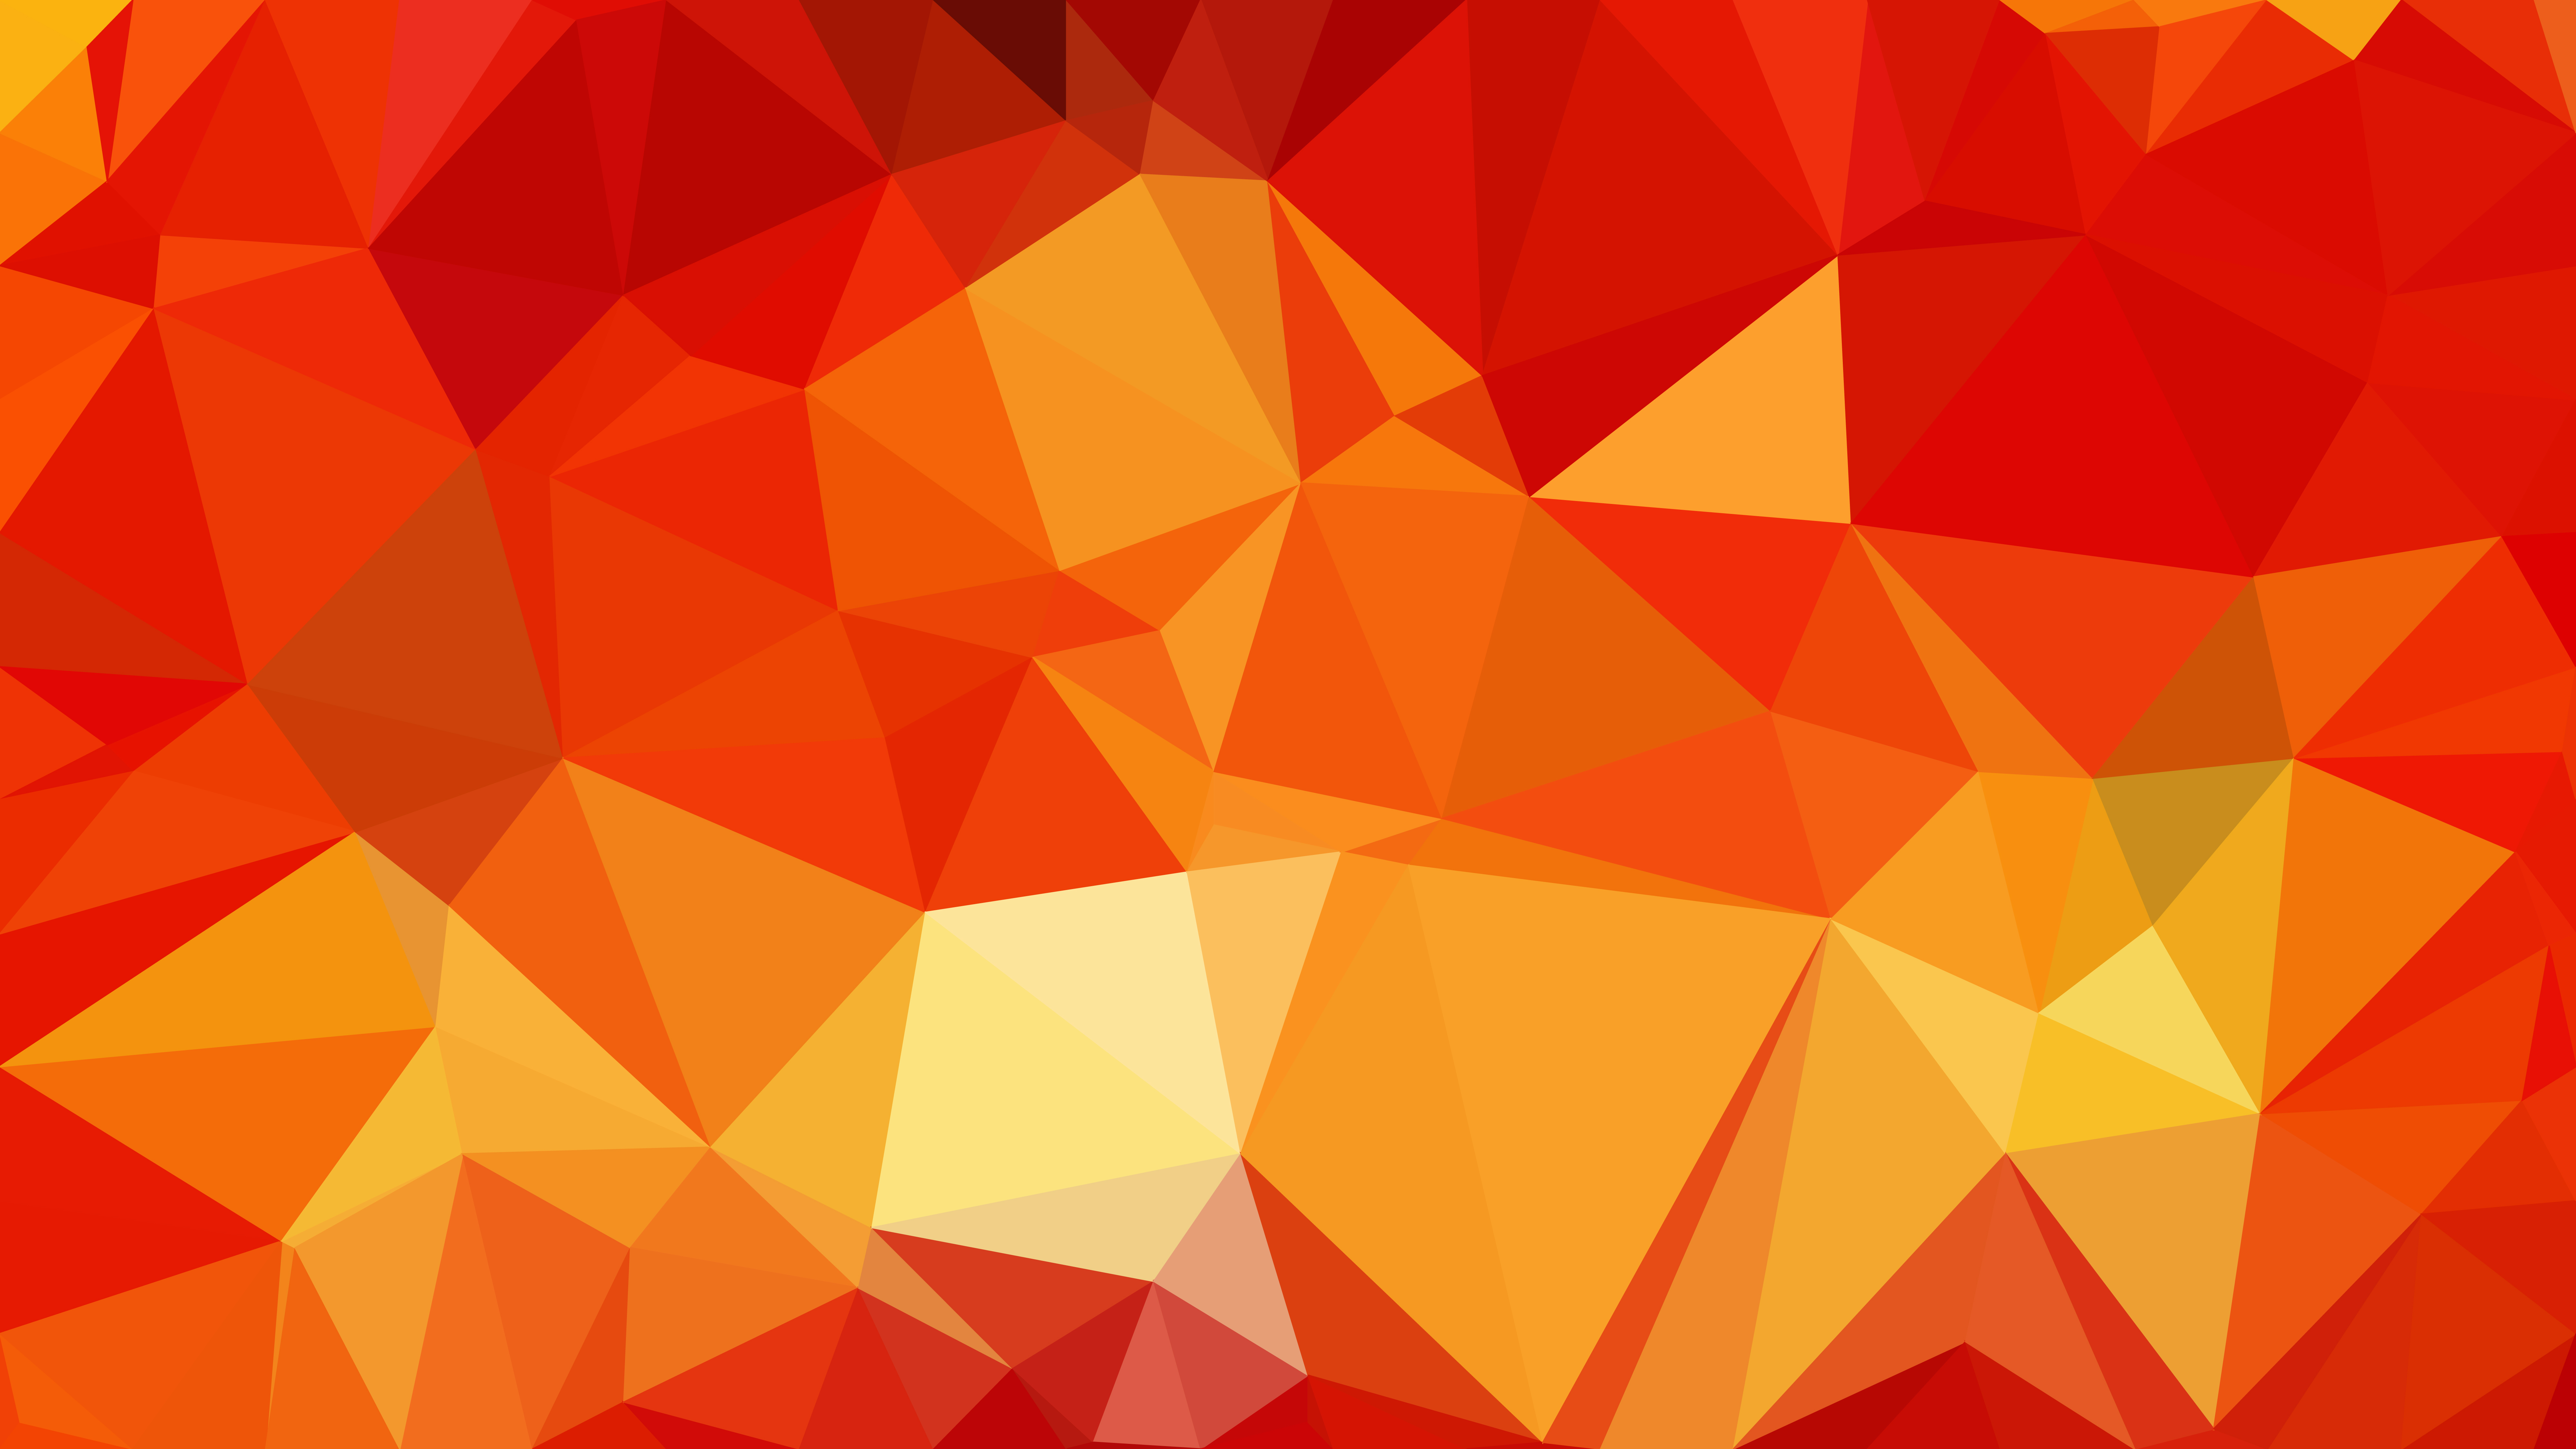 Free Red And Orange Triangle Geometric Background Illustration